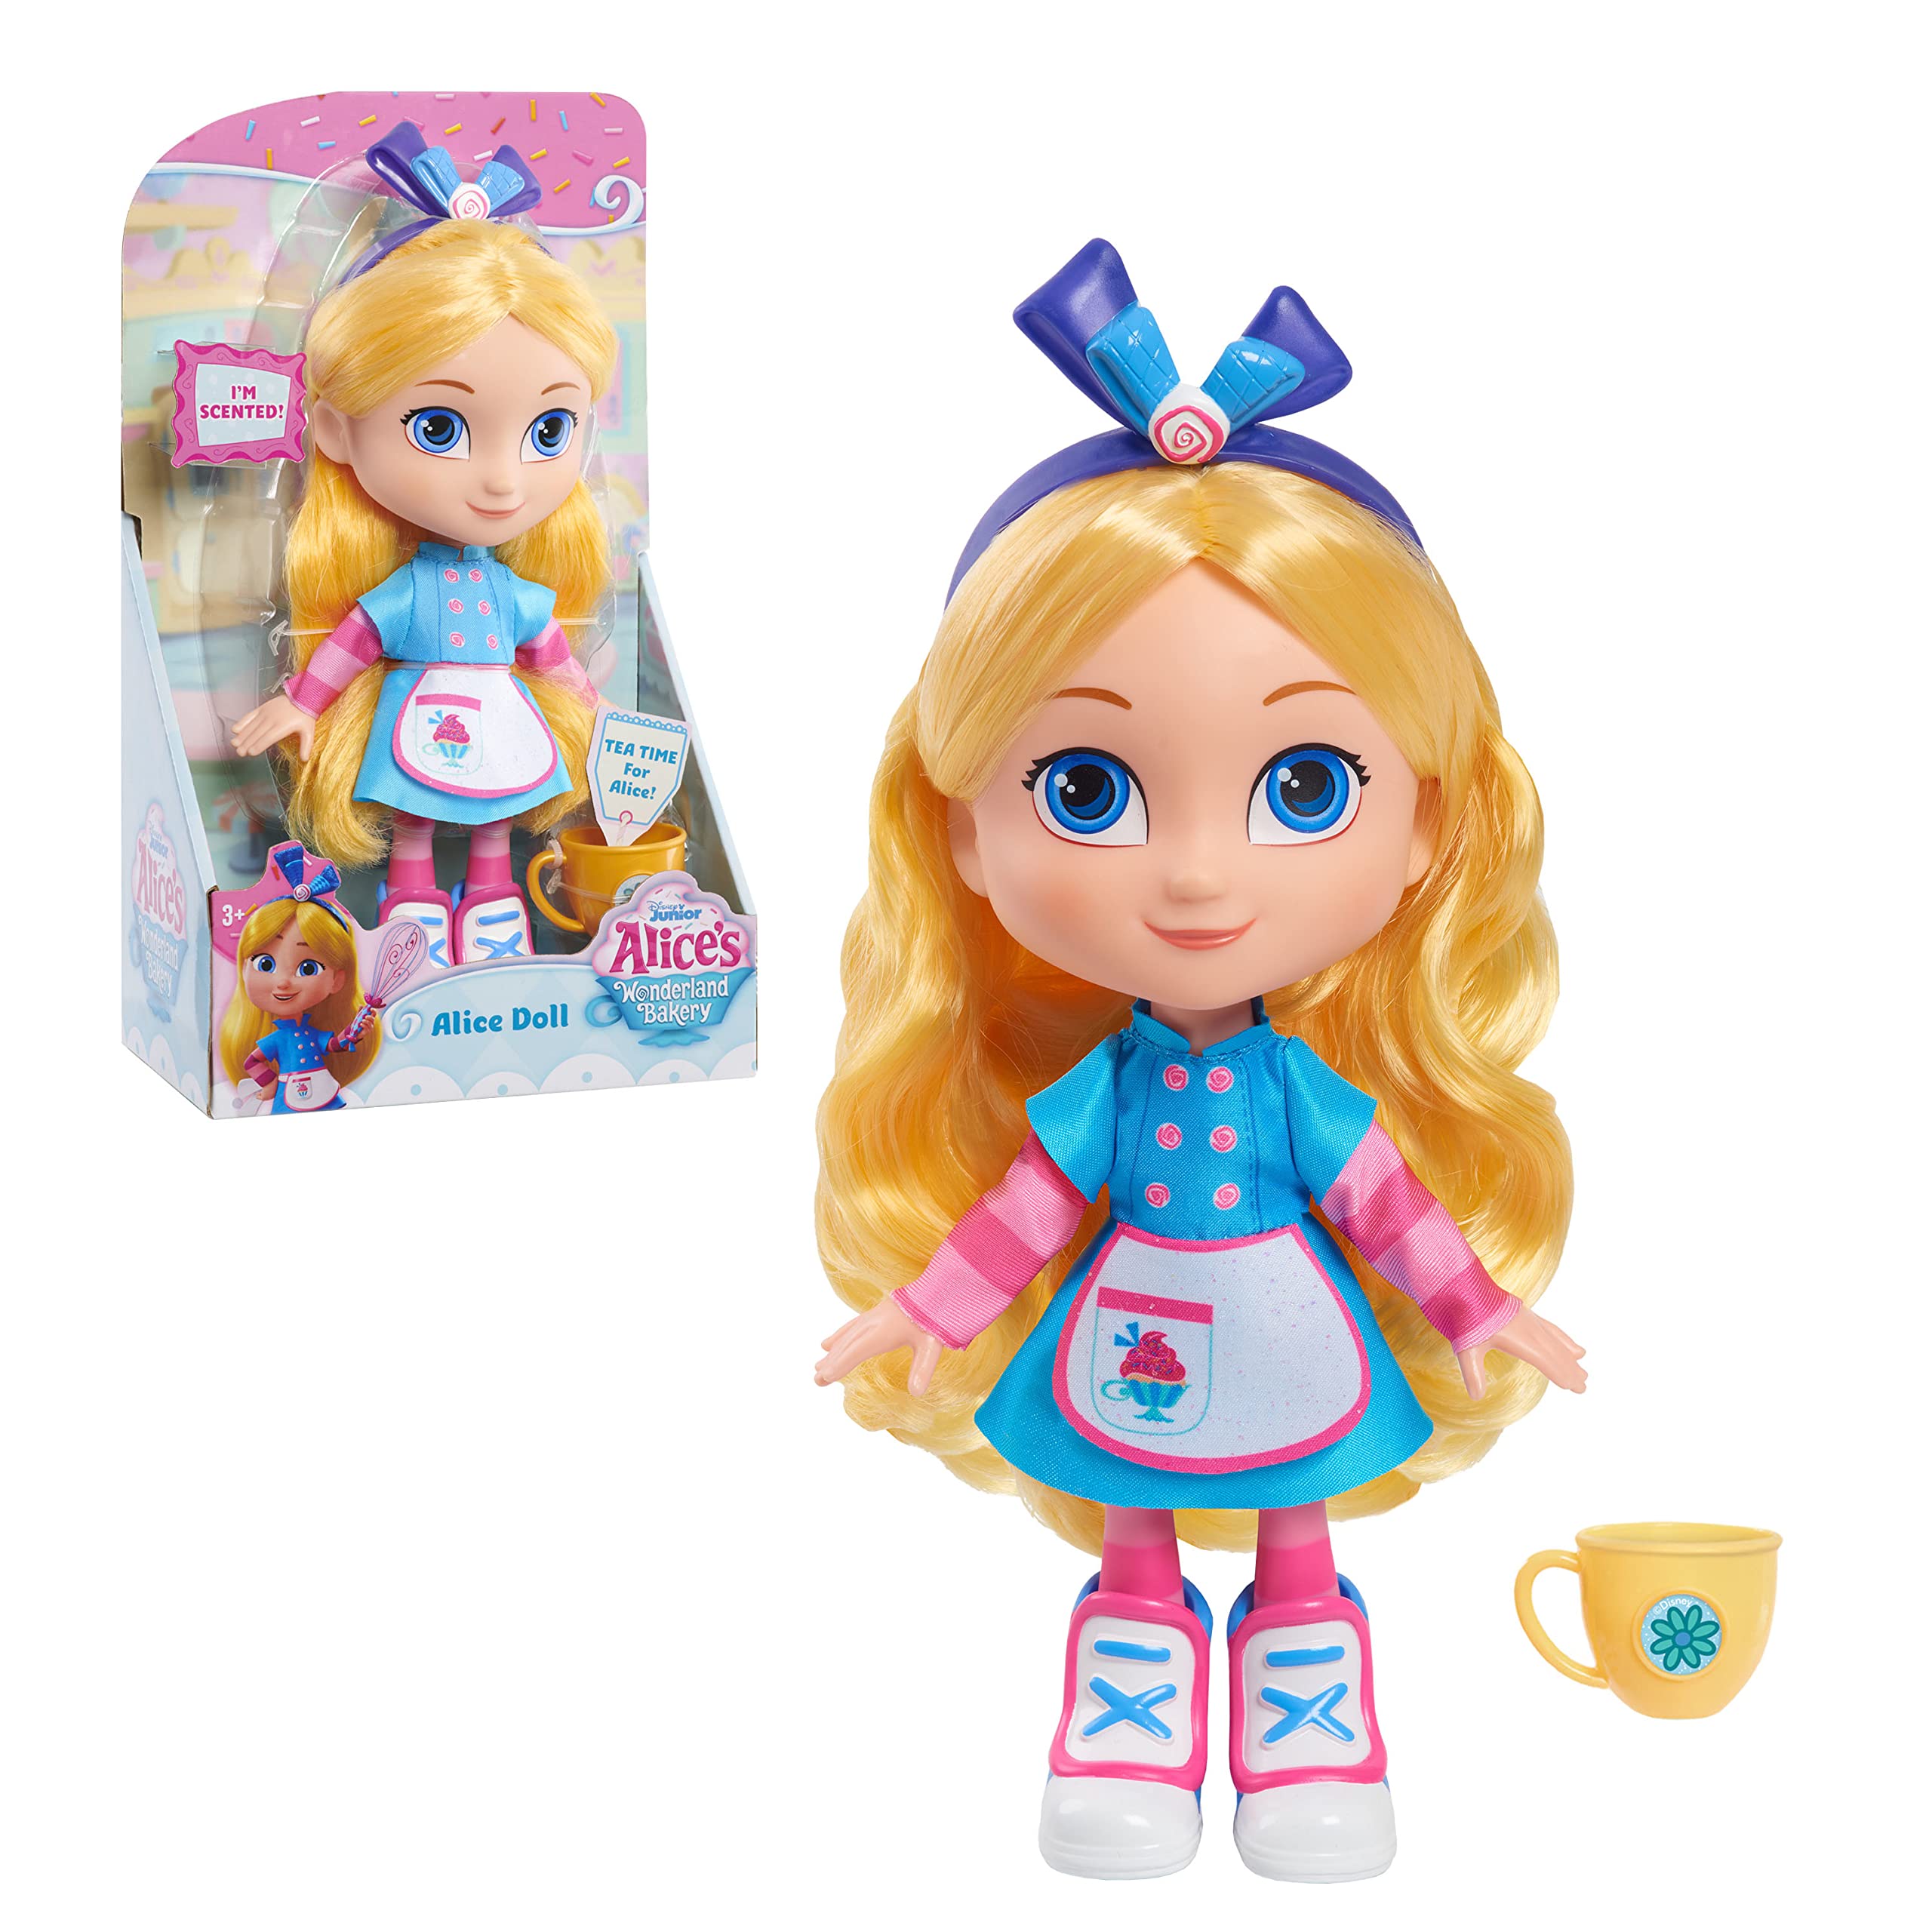 Disney Junior Alice’s Wonderland Bakery Alice Doll and Accessories $5.12